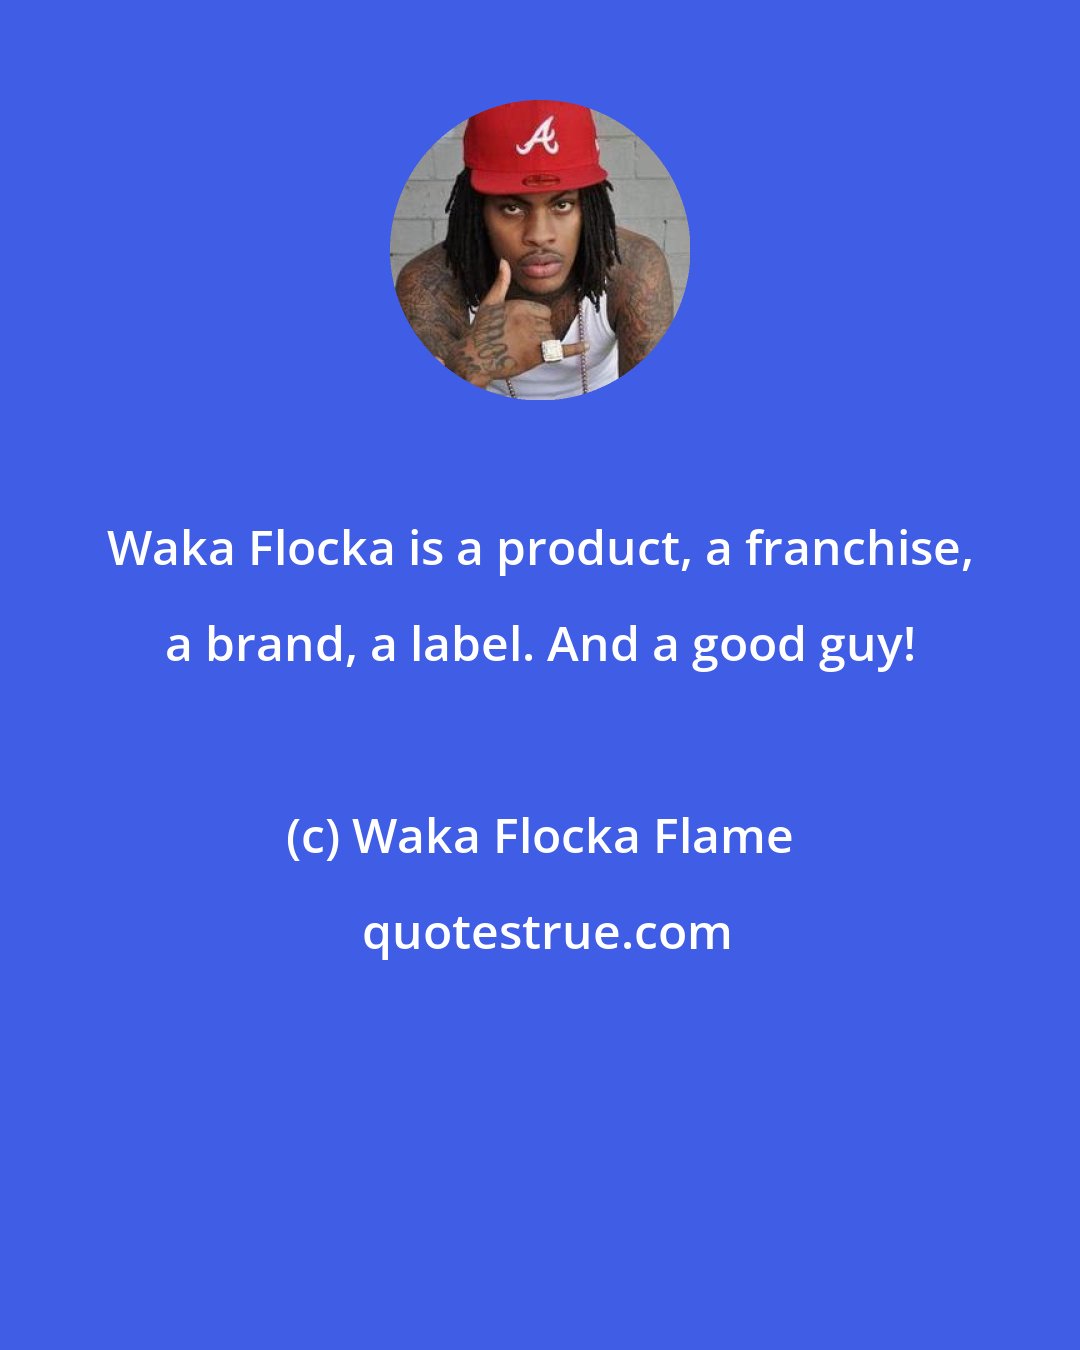 Waka Flocka Flame: Waka Flocka is a product, a franchise, a brand, a label. And a good guy!